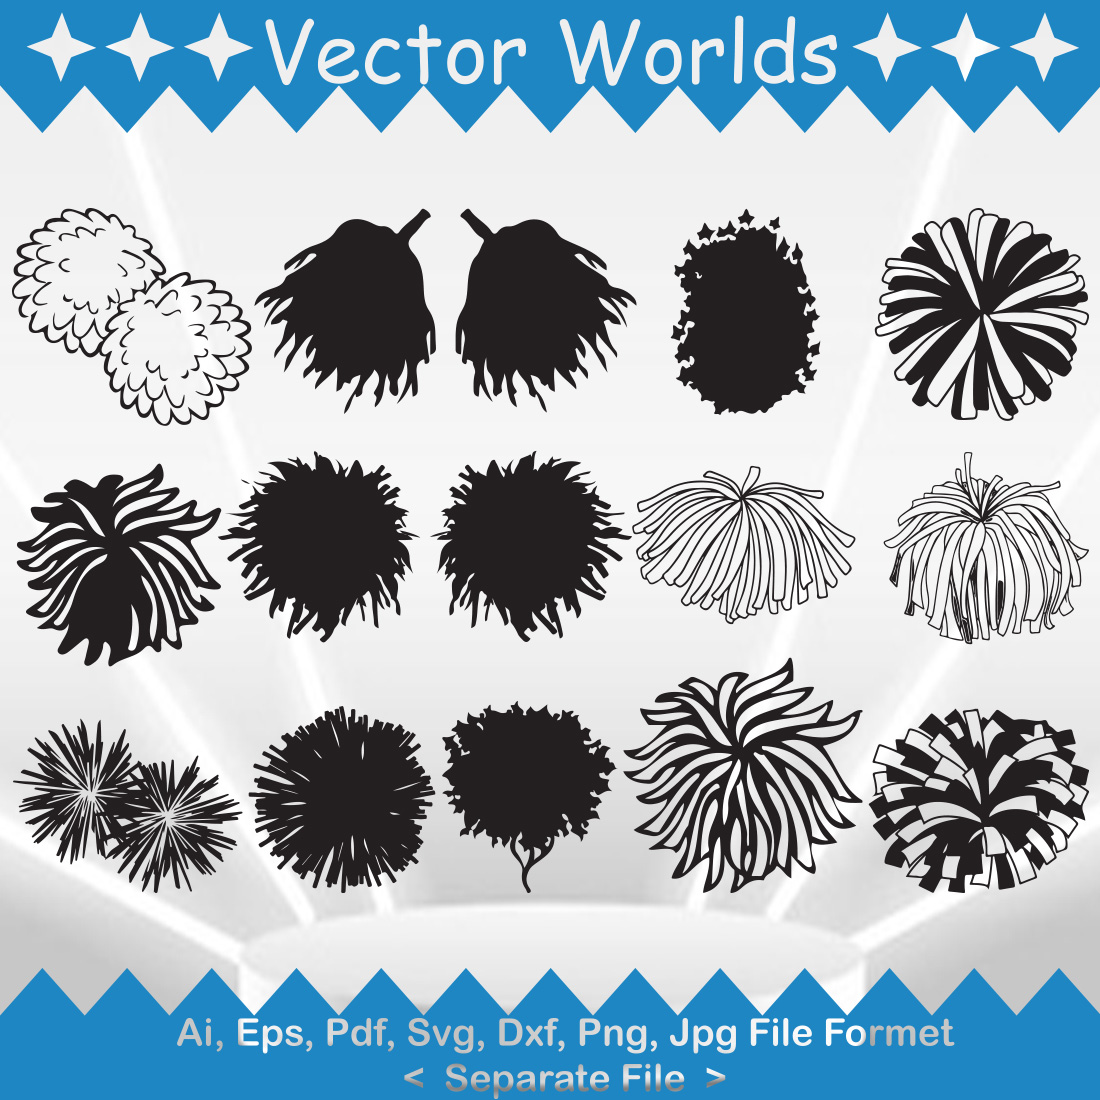 Pom poms SVG Vector Design cover image.